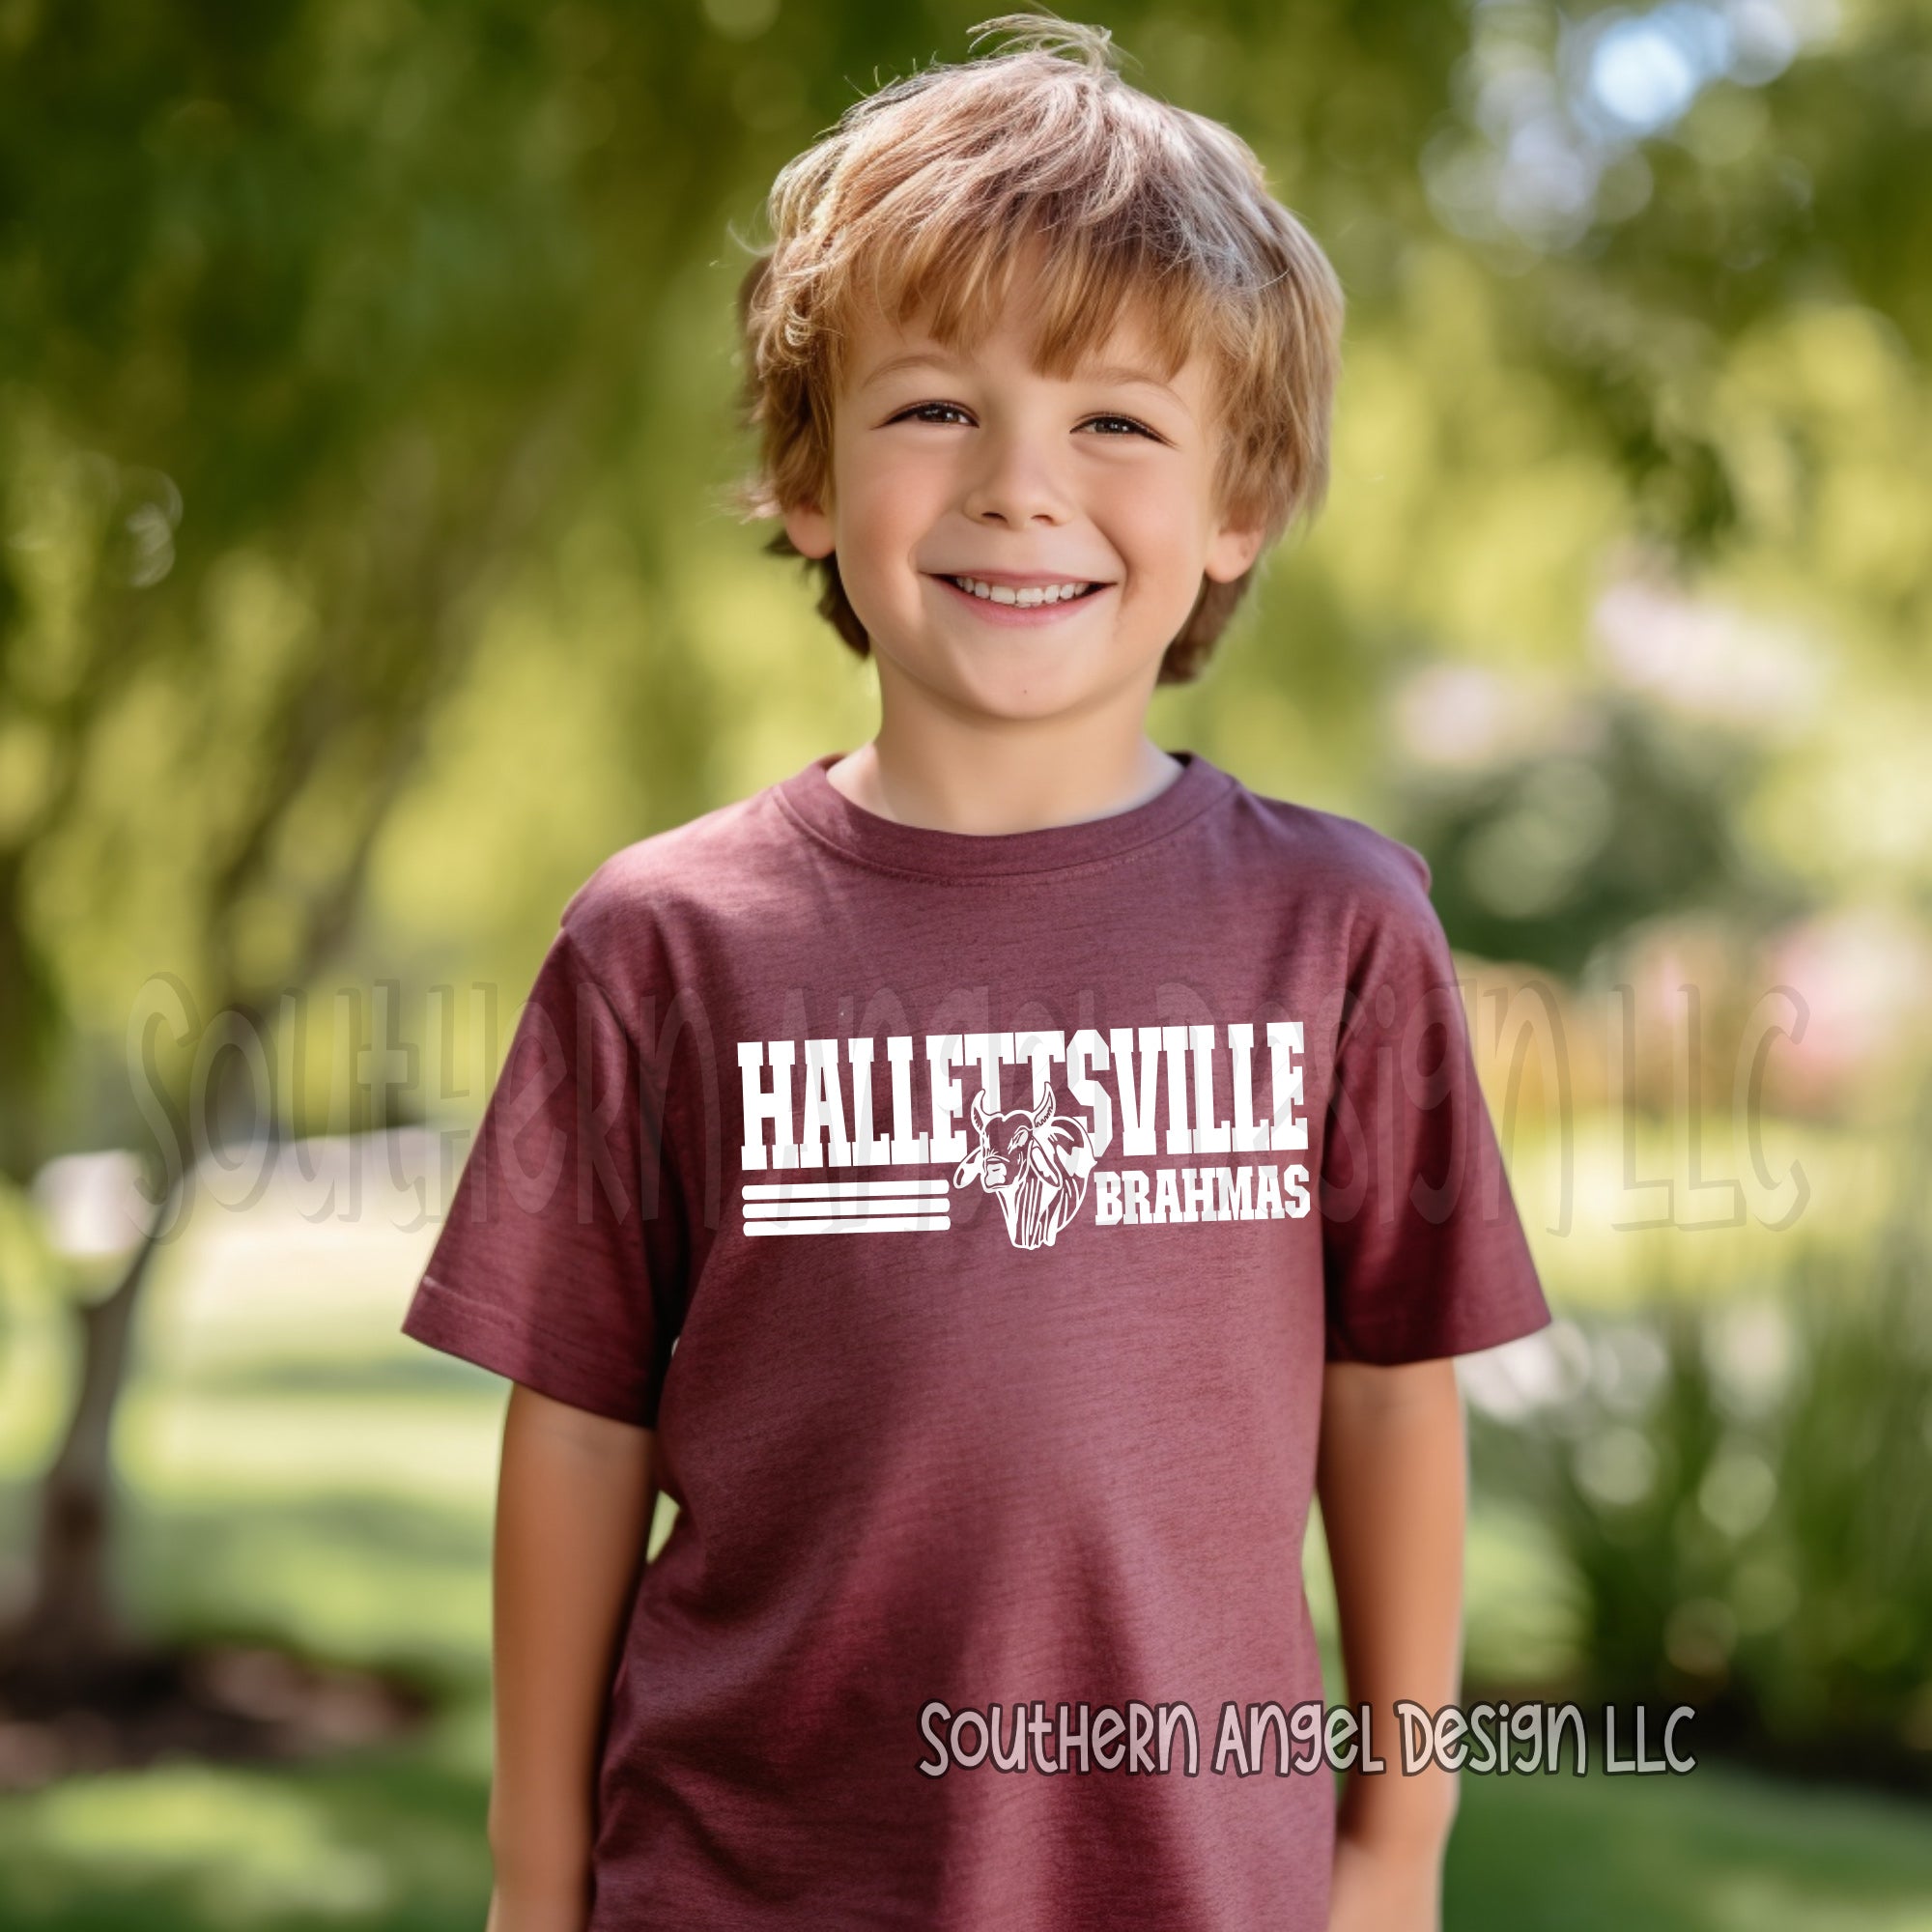 Dim Gray Hallettsville Brahmas shirt 5741573C-D96C-4E07-A3FC-992F9C75FB6E.jpg hallettsville-brahmas-shirt School